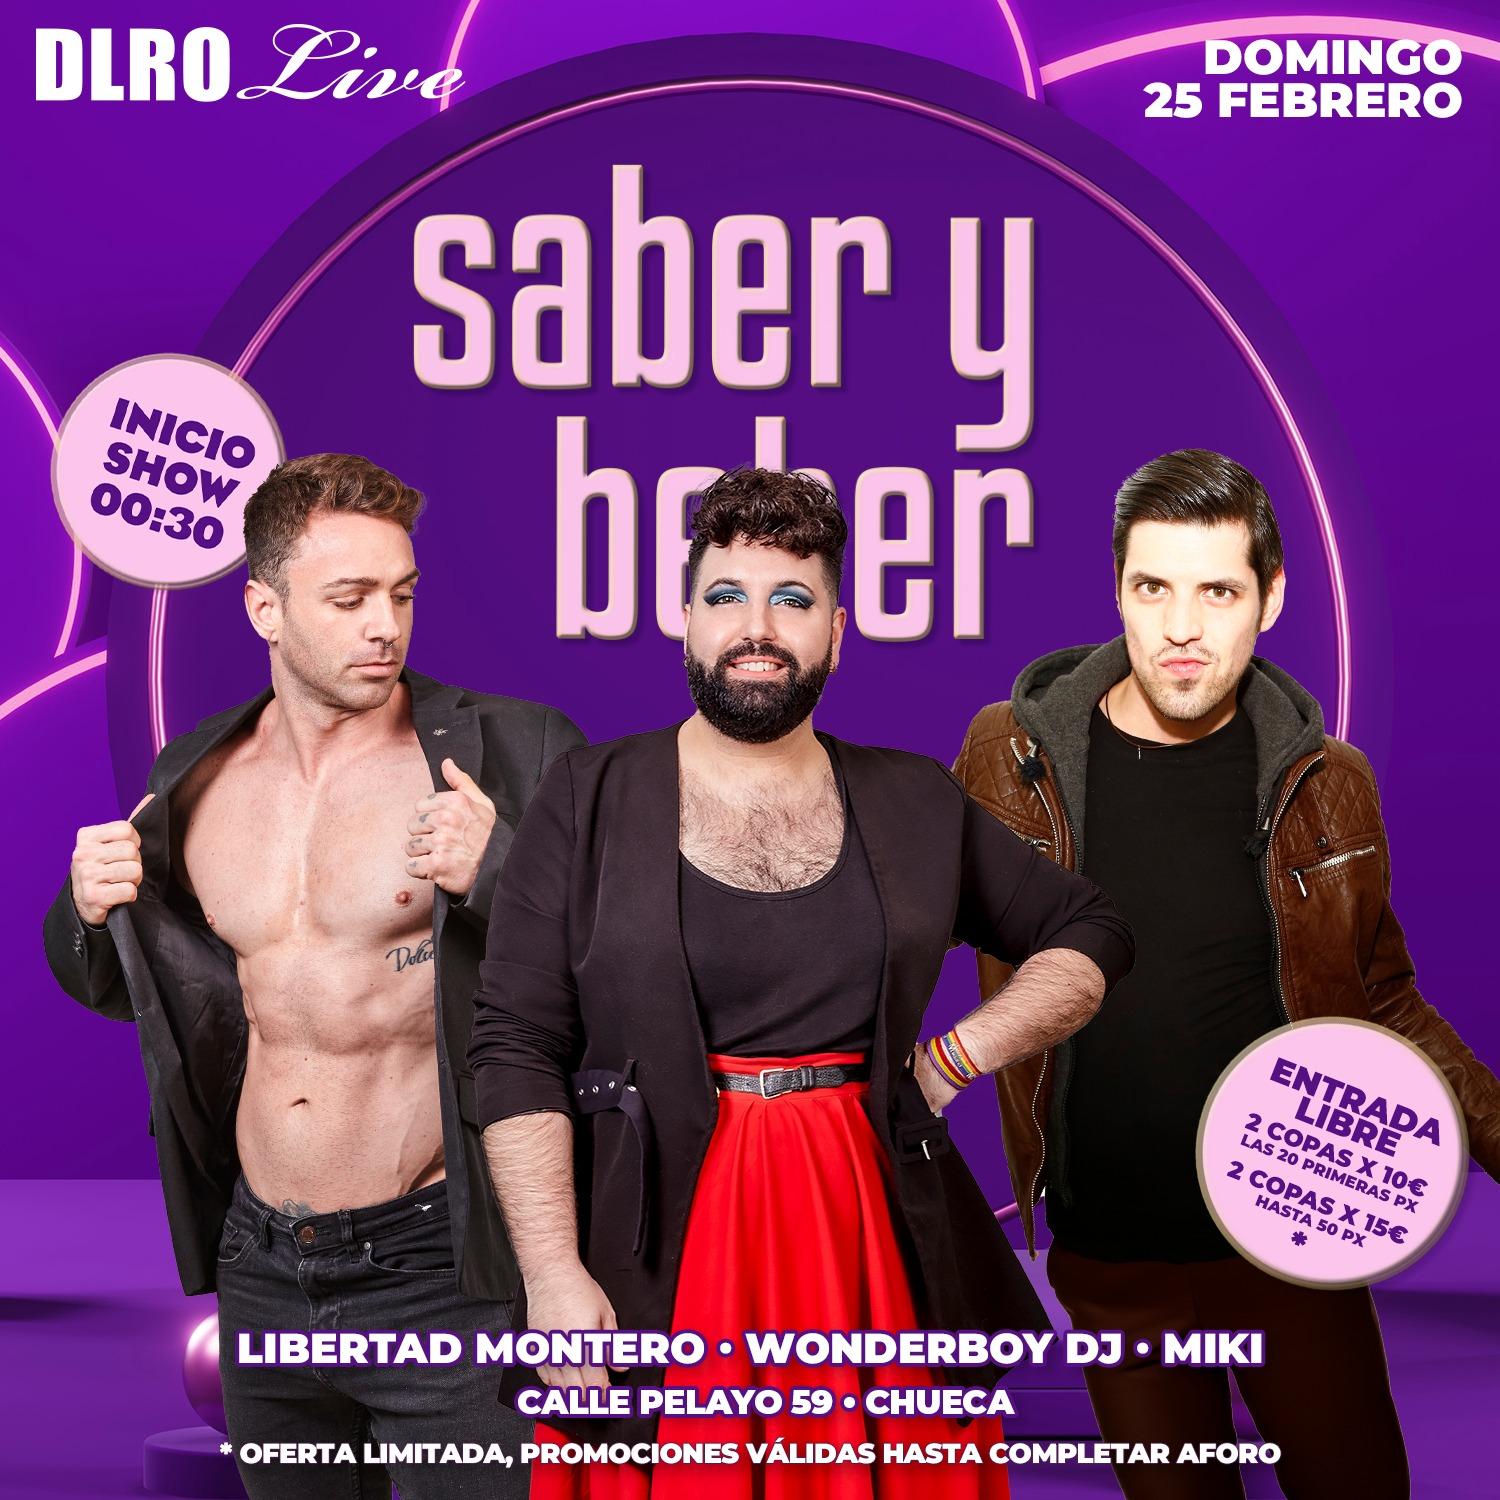 Evento LGTBIQ+ en Madrid